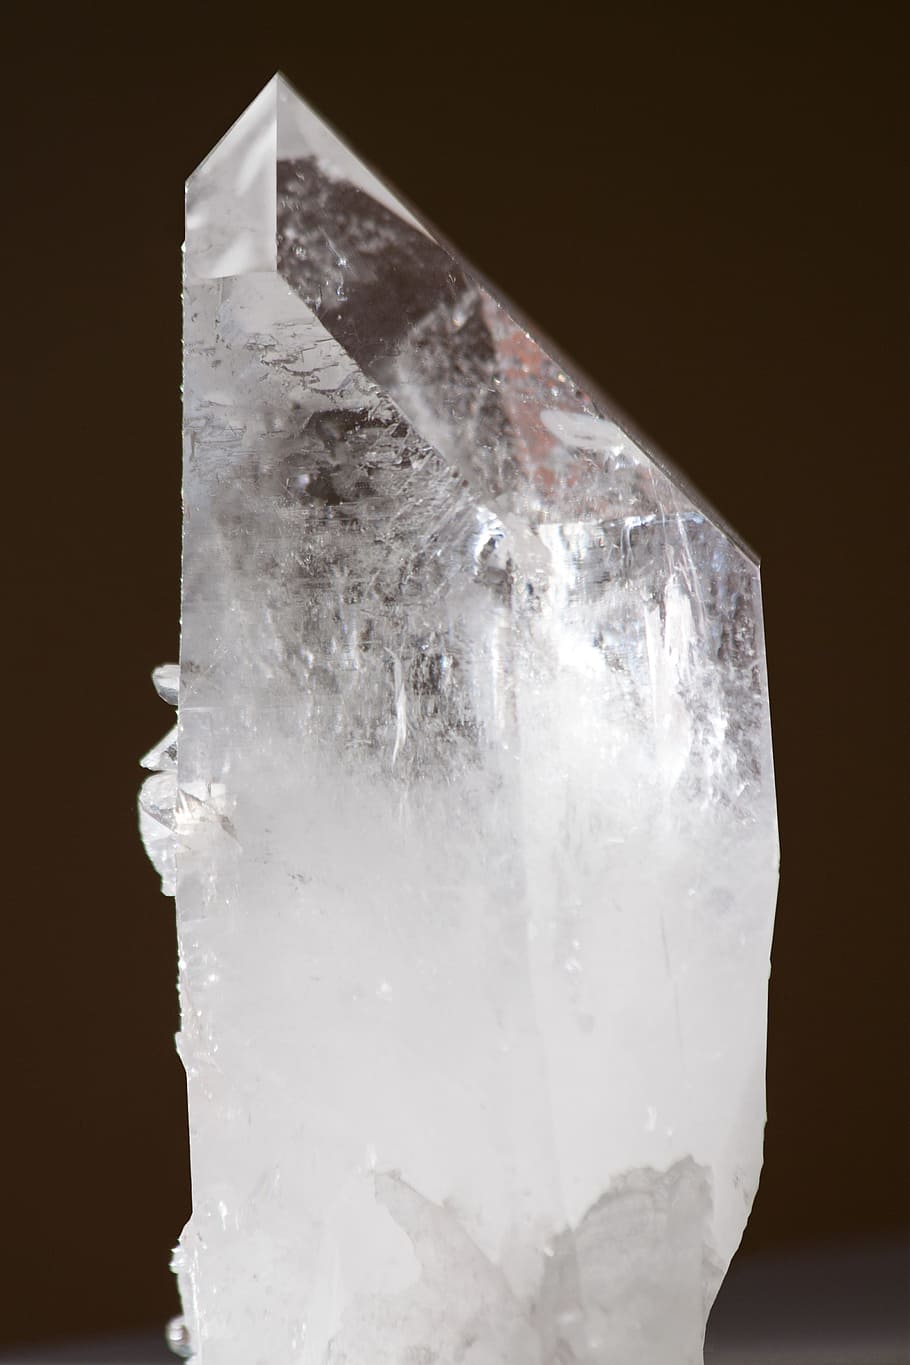 kristal bening, murni, kuarsa, batu kristal, mineral, kuarsa murni, trigonal, permukaan prisma, silikon dioksida, transparan